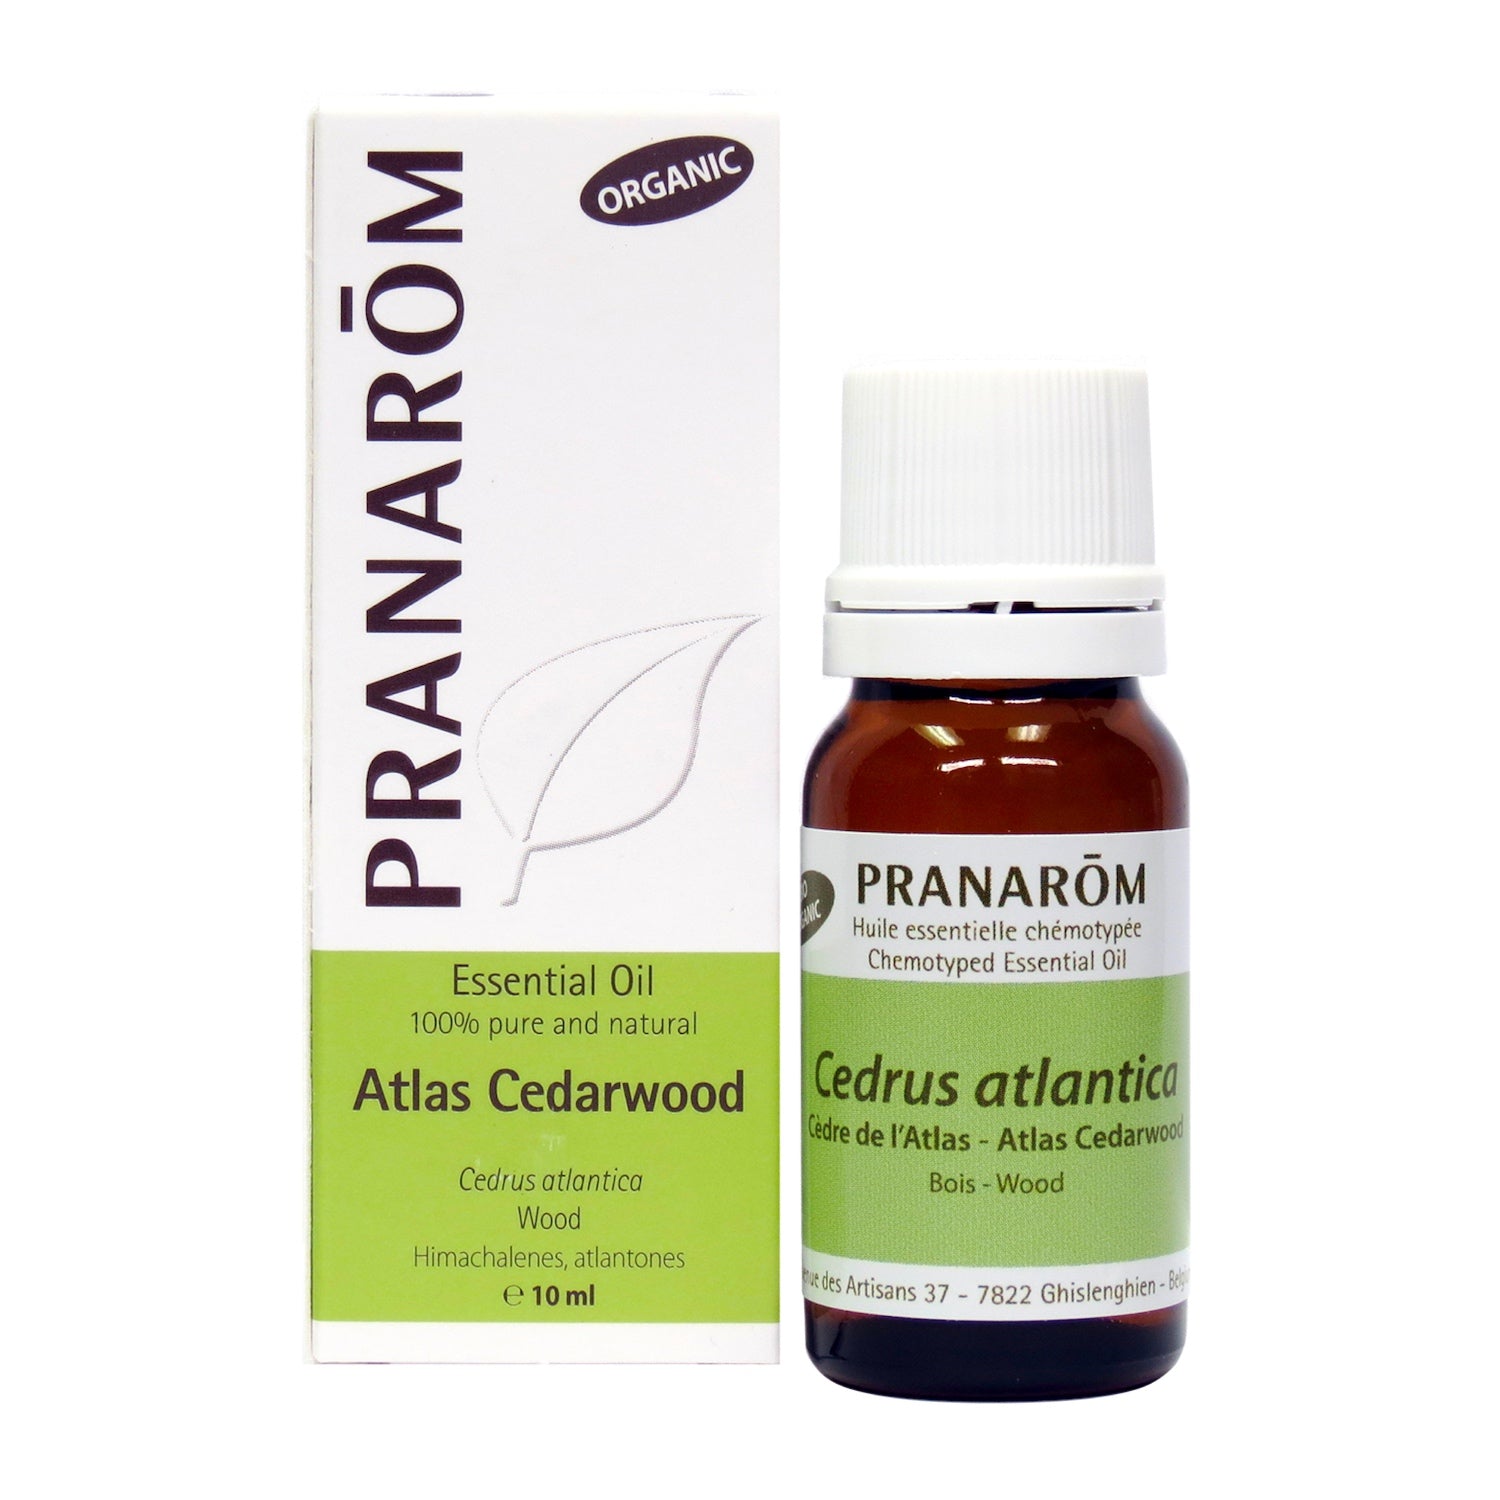 Pranarom / Essential Oils – Bio Lonreco